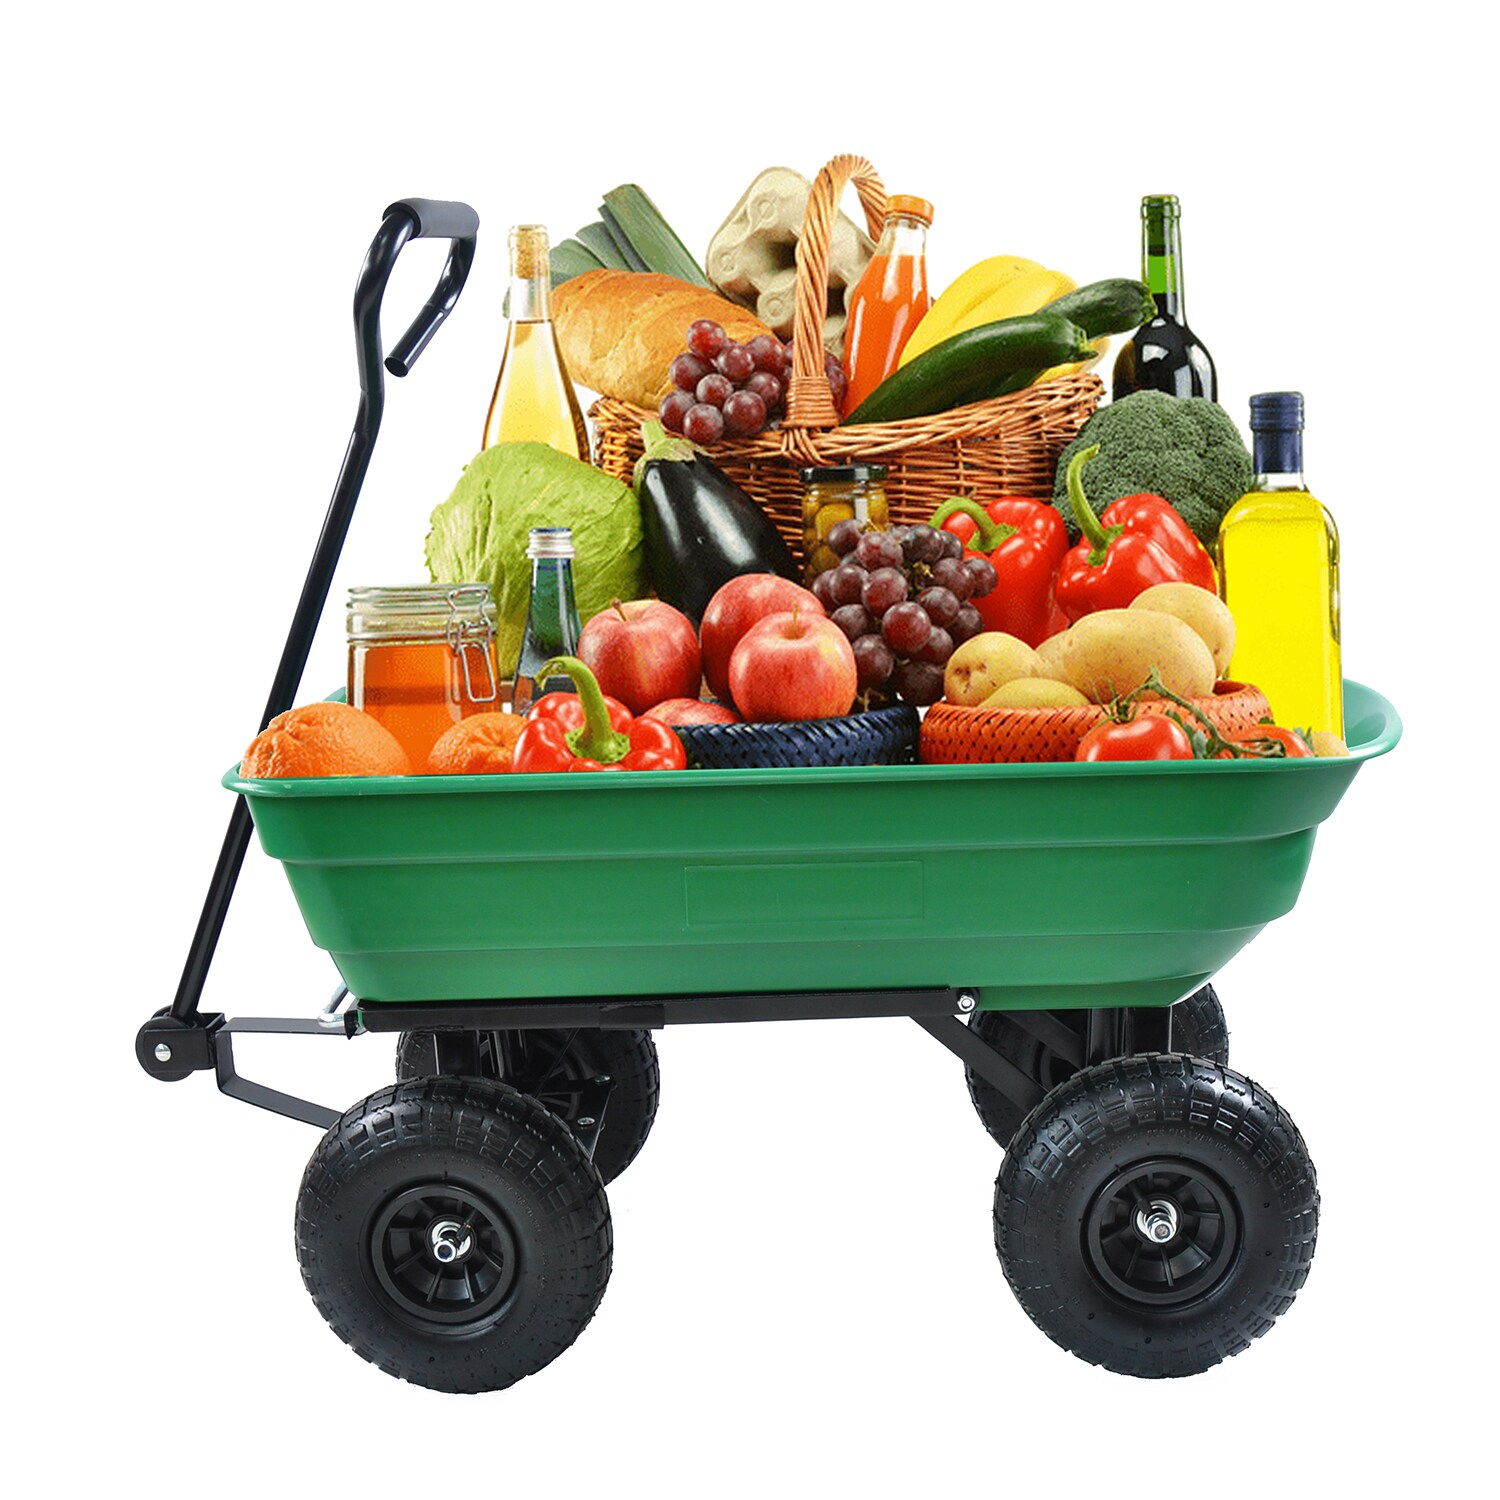 SINOFURN Heavy Duty Green Garden Wagon Cart with Pneumatic Tires - Load ...